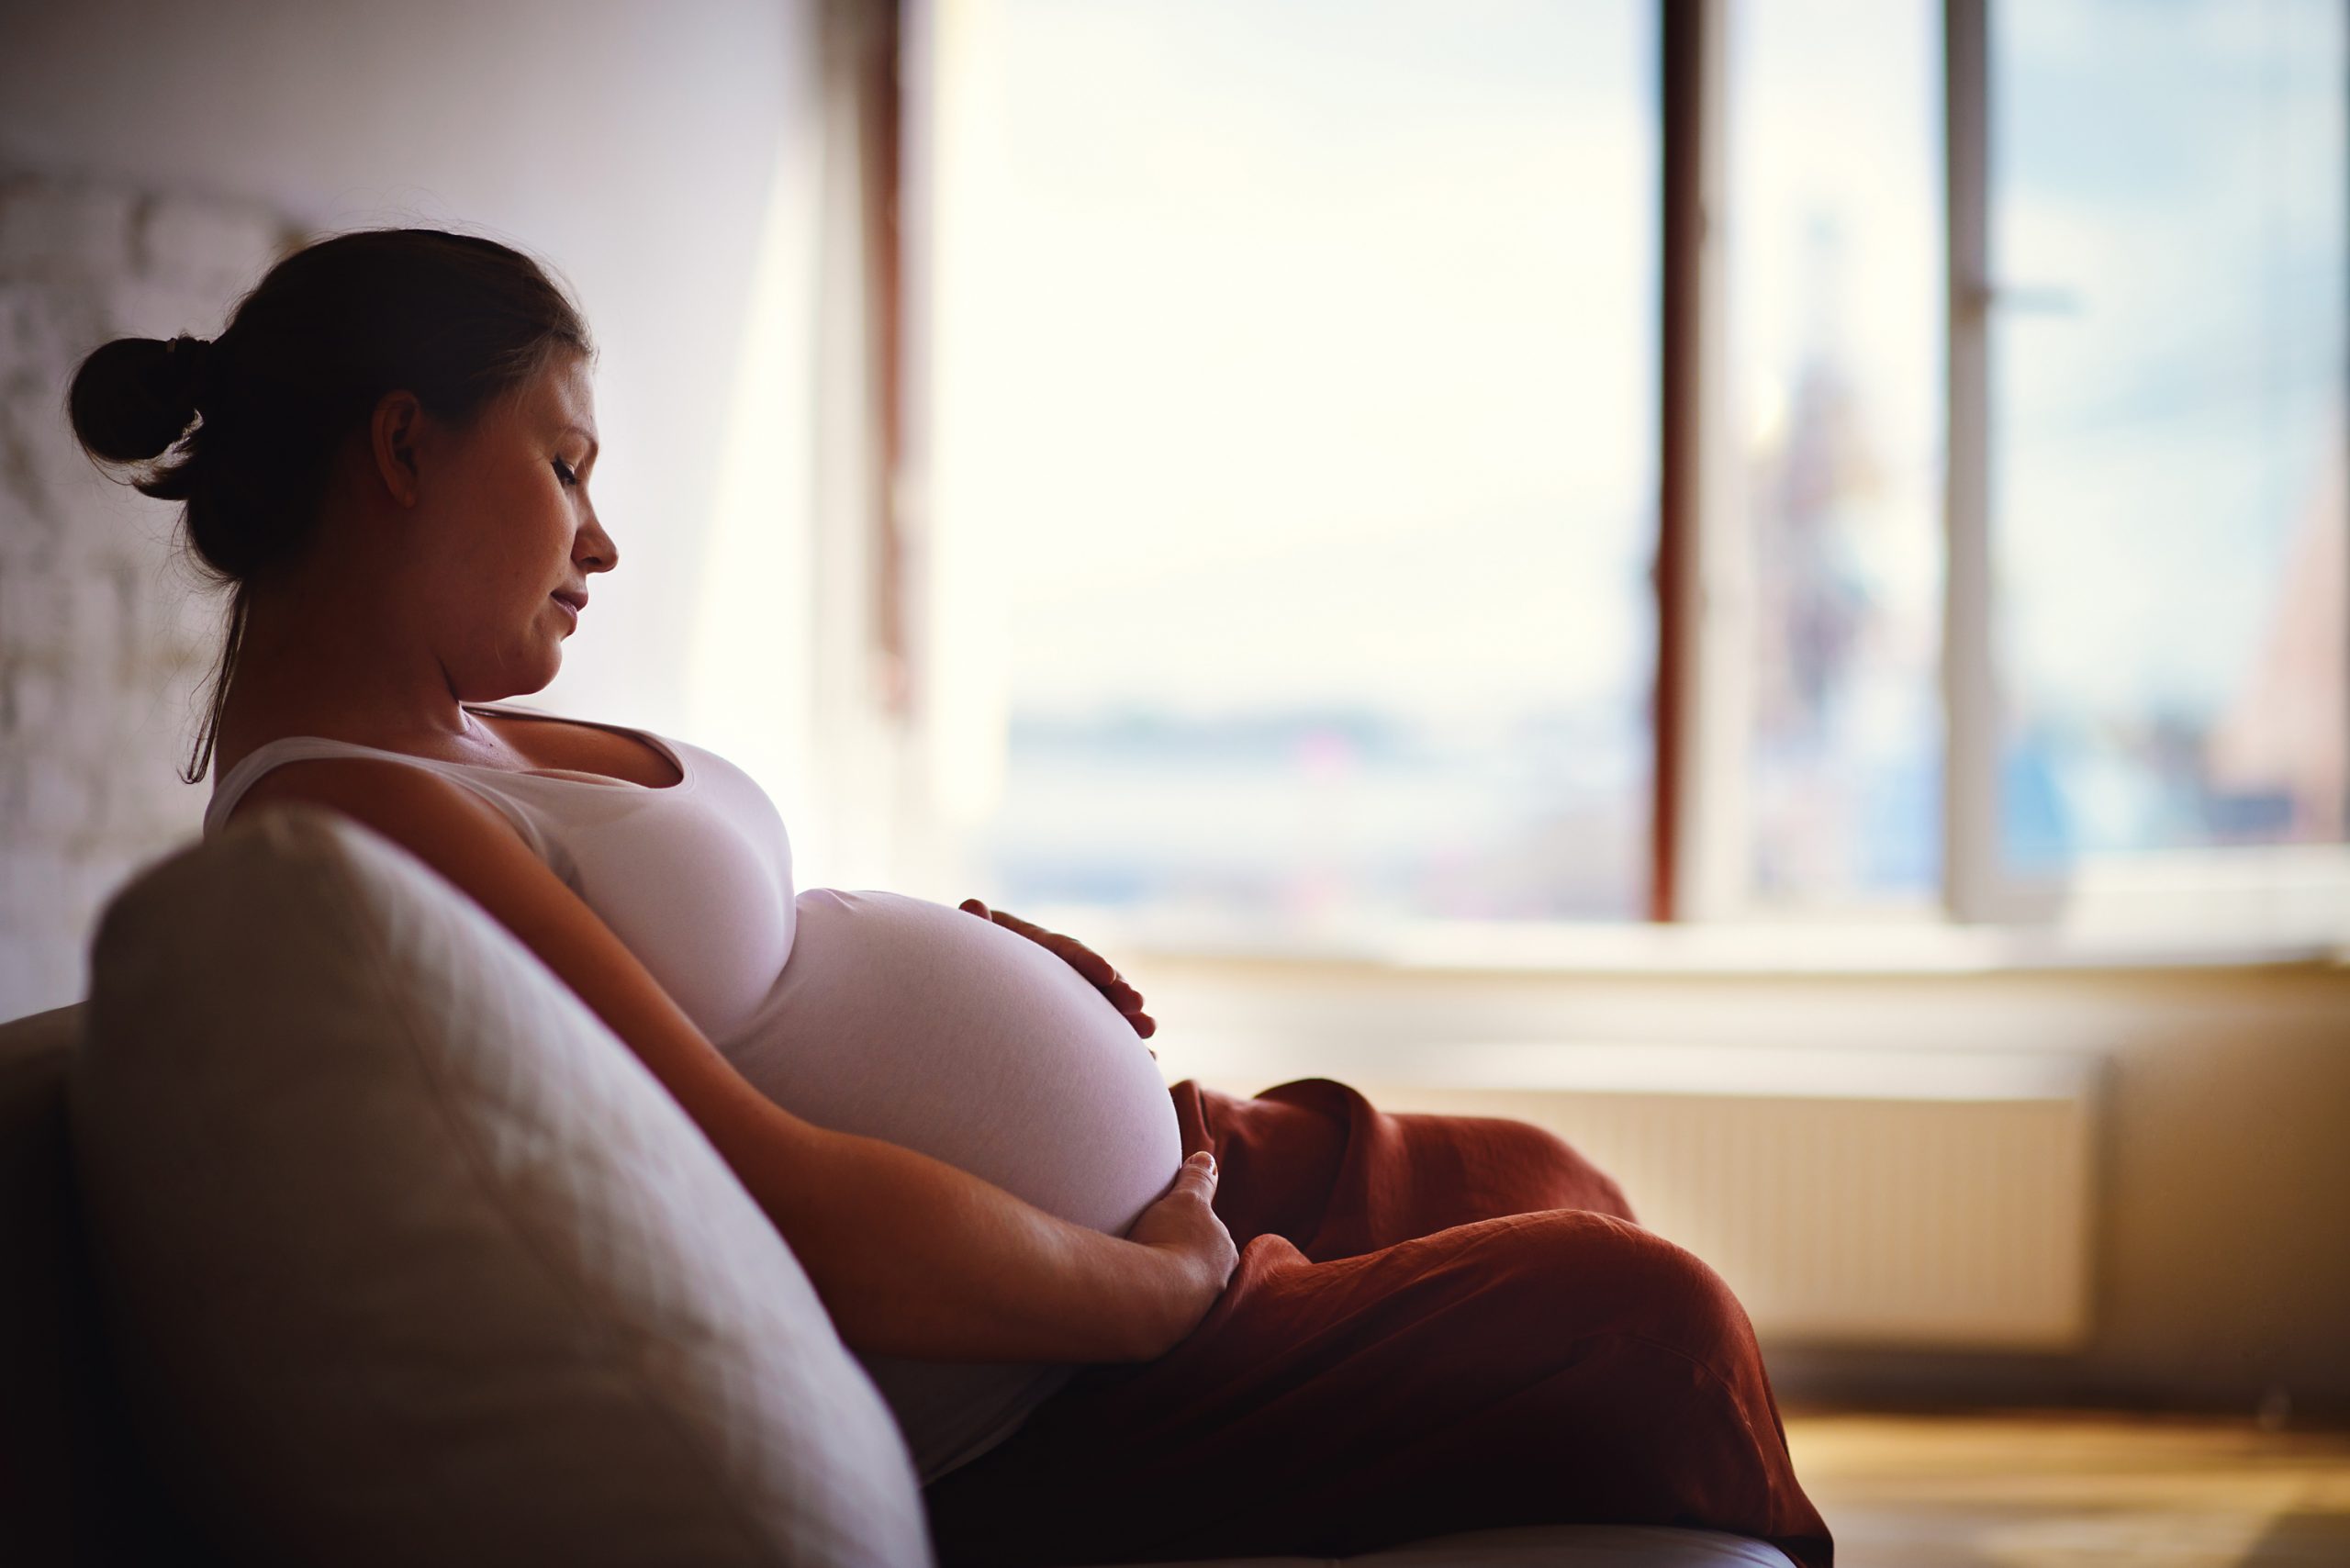 Bushfire smoke and pregnancy – the risks